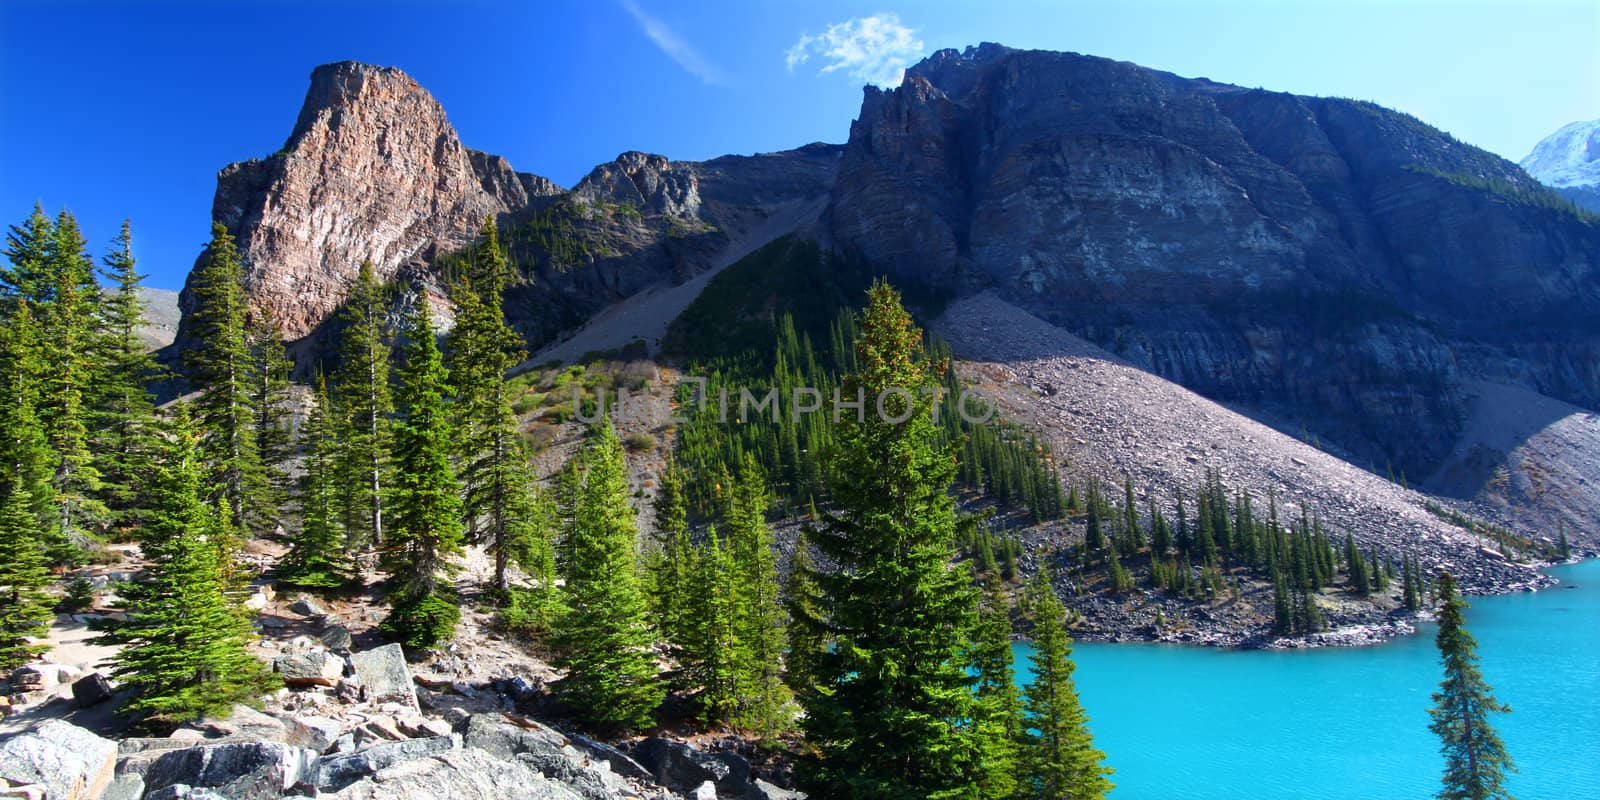 Famous Moraine Lake of Banff National Park in Alberta, Canada.